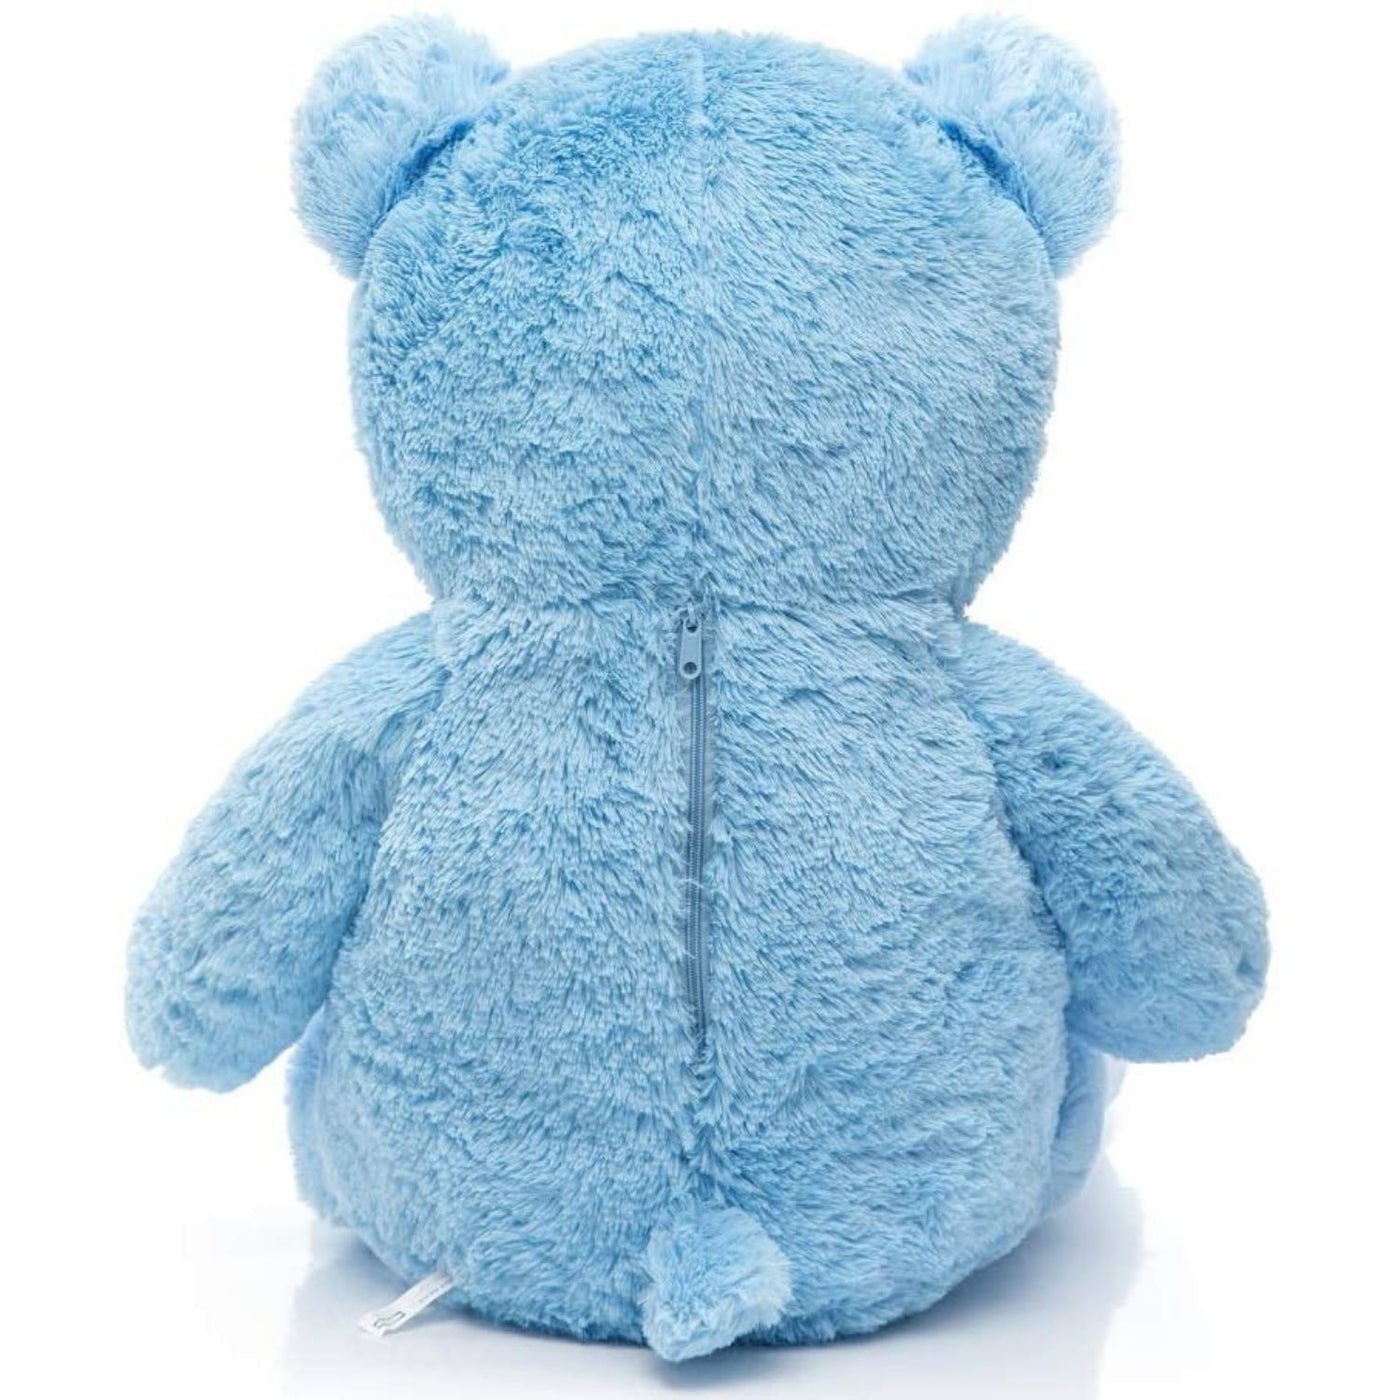 Giant Teddy Bear Stuffed Toy, Blue, 39/47/55 Inches - MorisMos Plush Toys